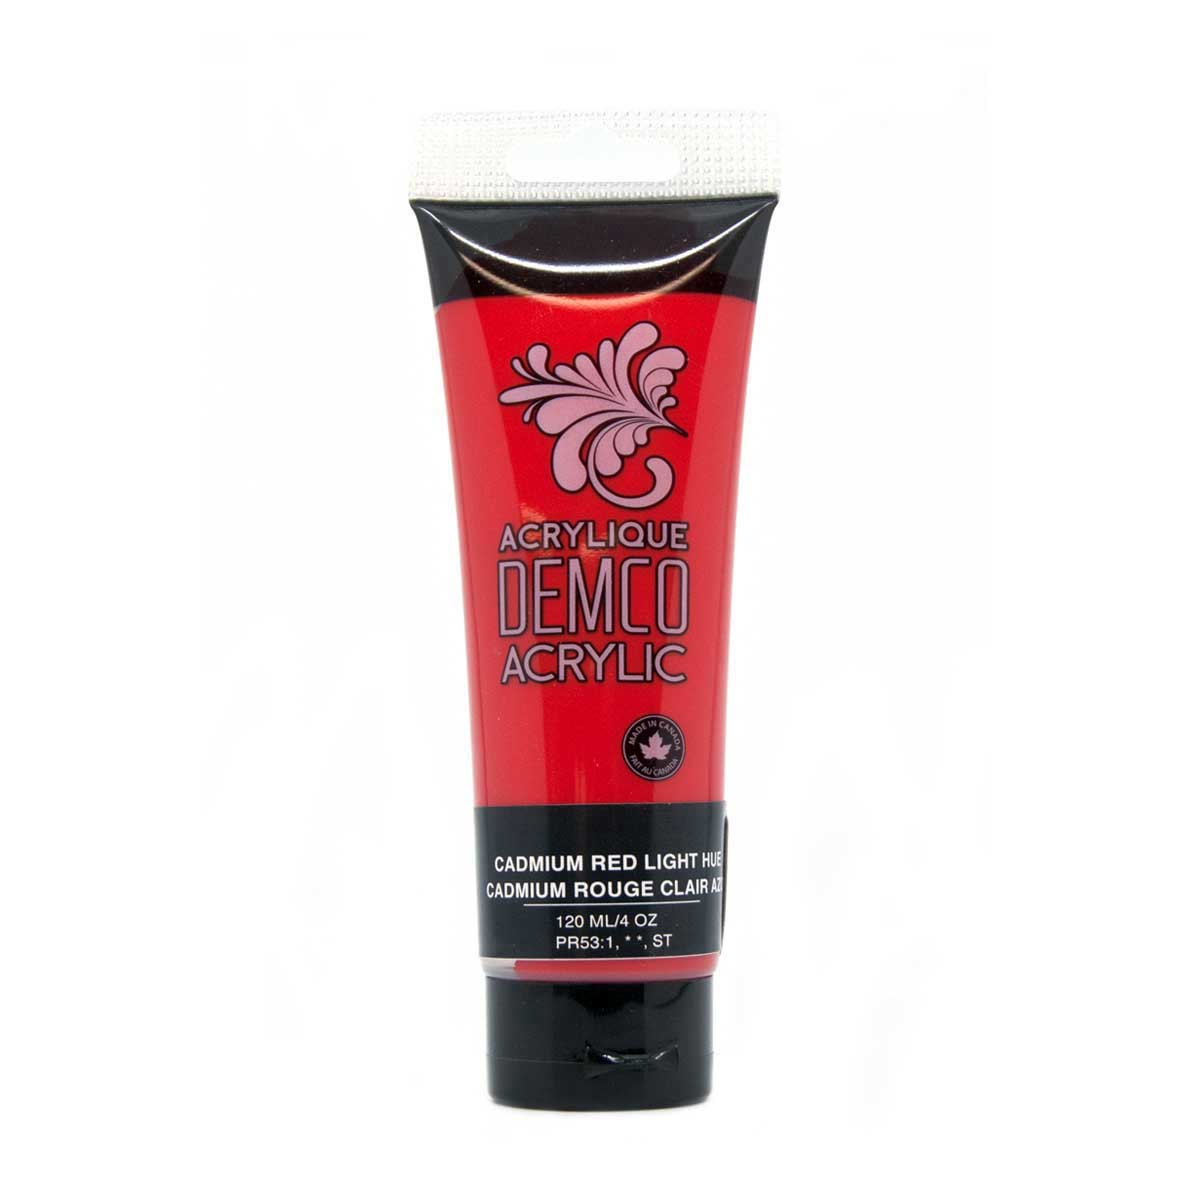 Demco Acrylic Cadmium Red Light Hue 120ml/4oz